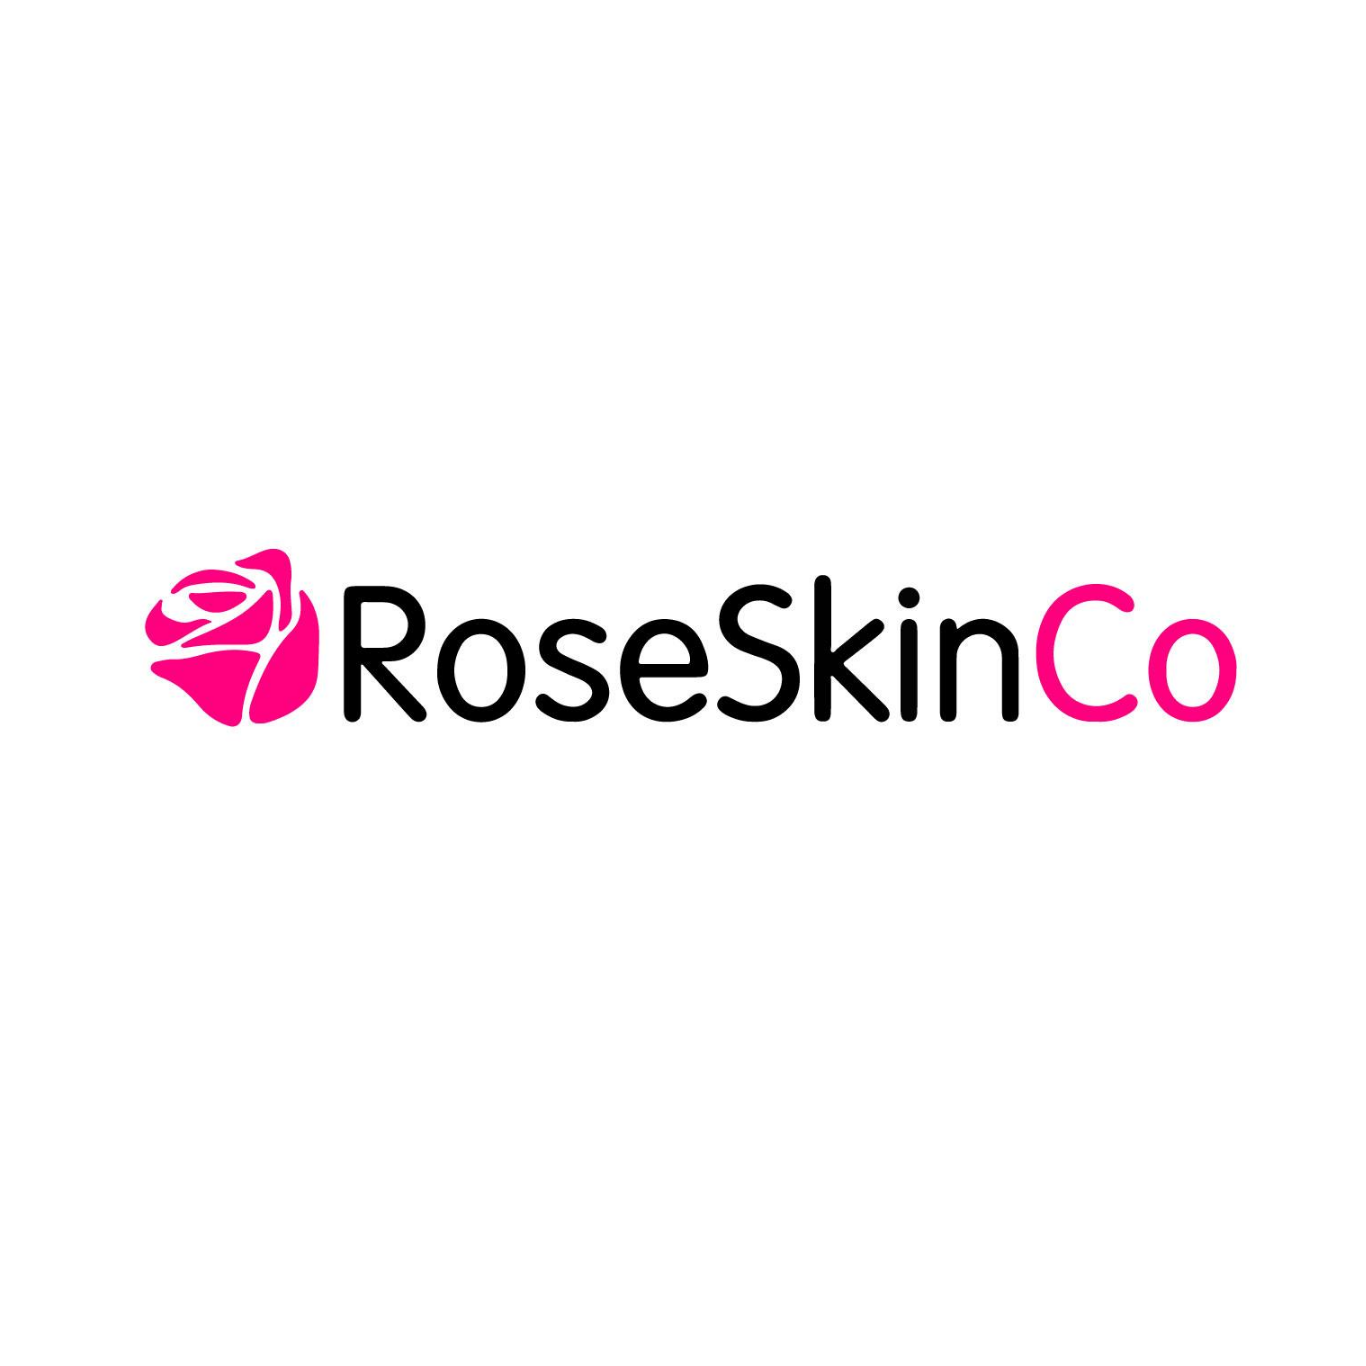 RoseSkinCo | Better Business Bureau® Profile